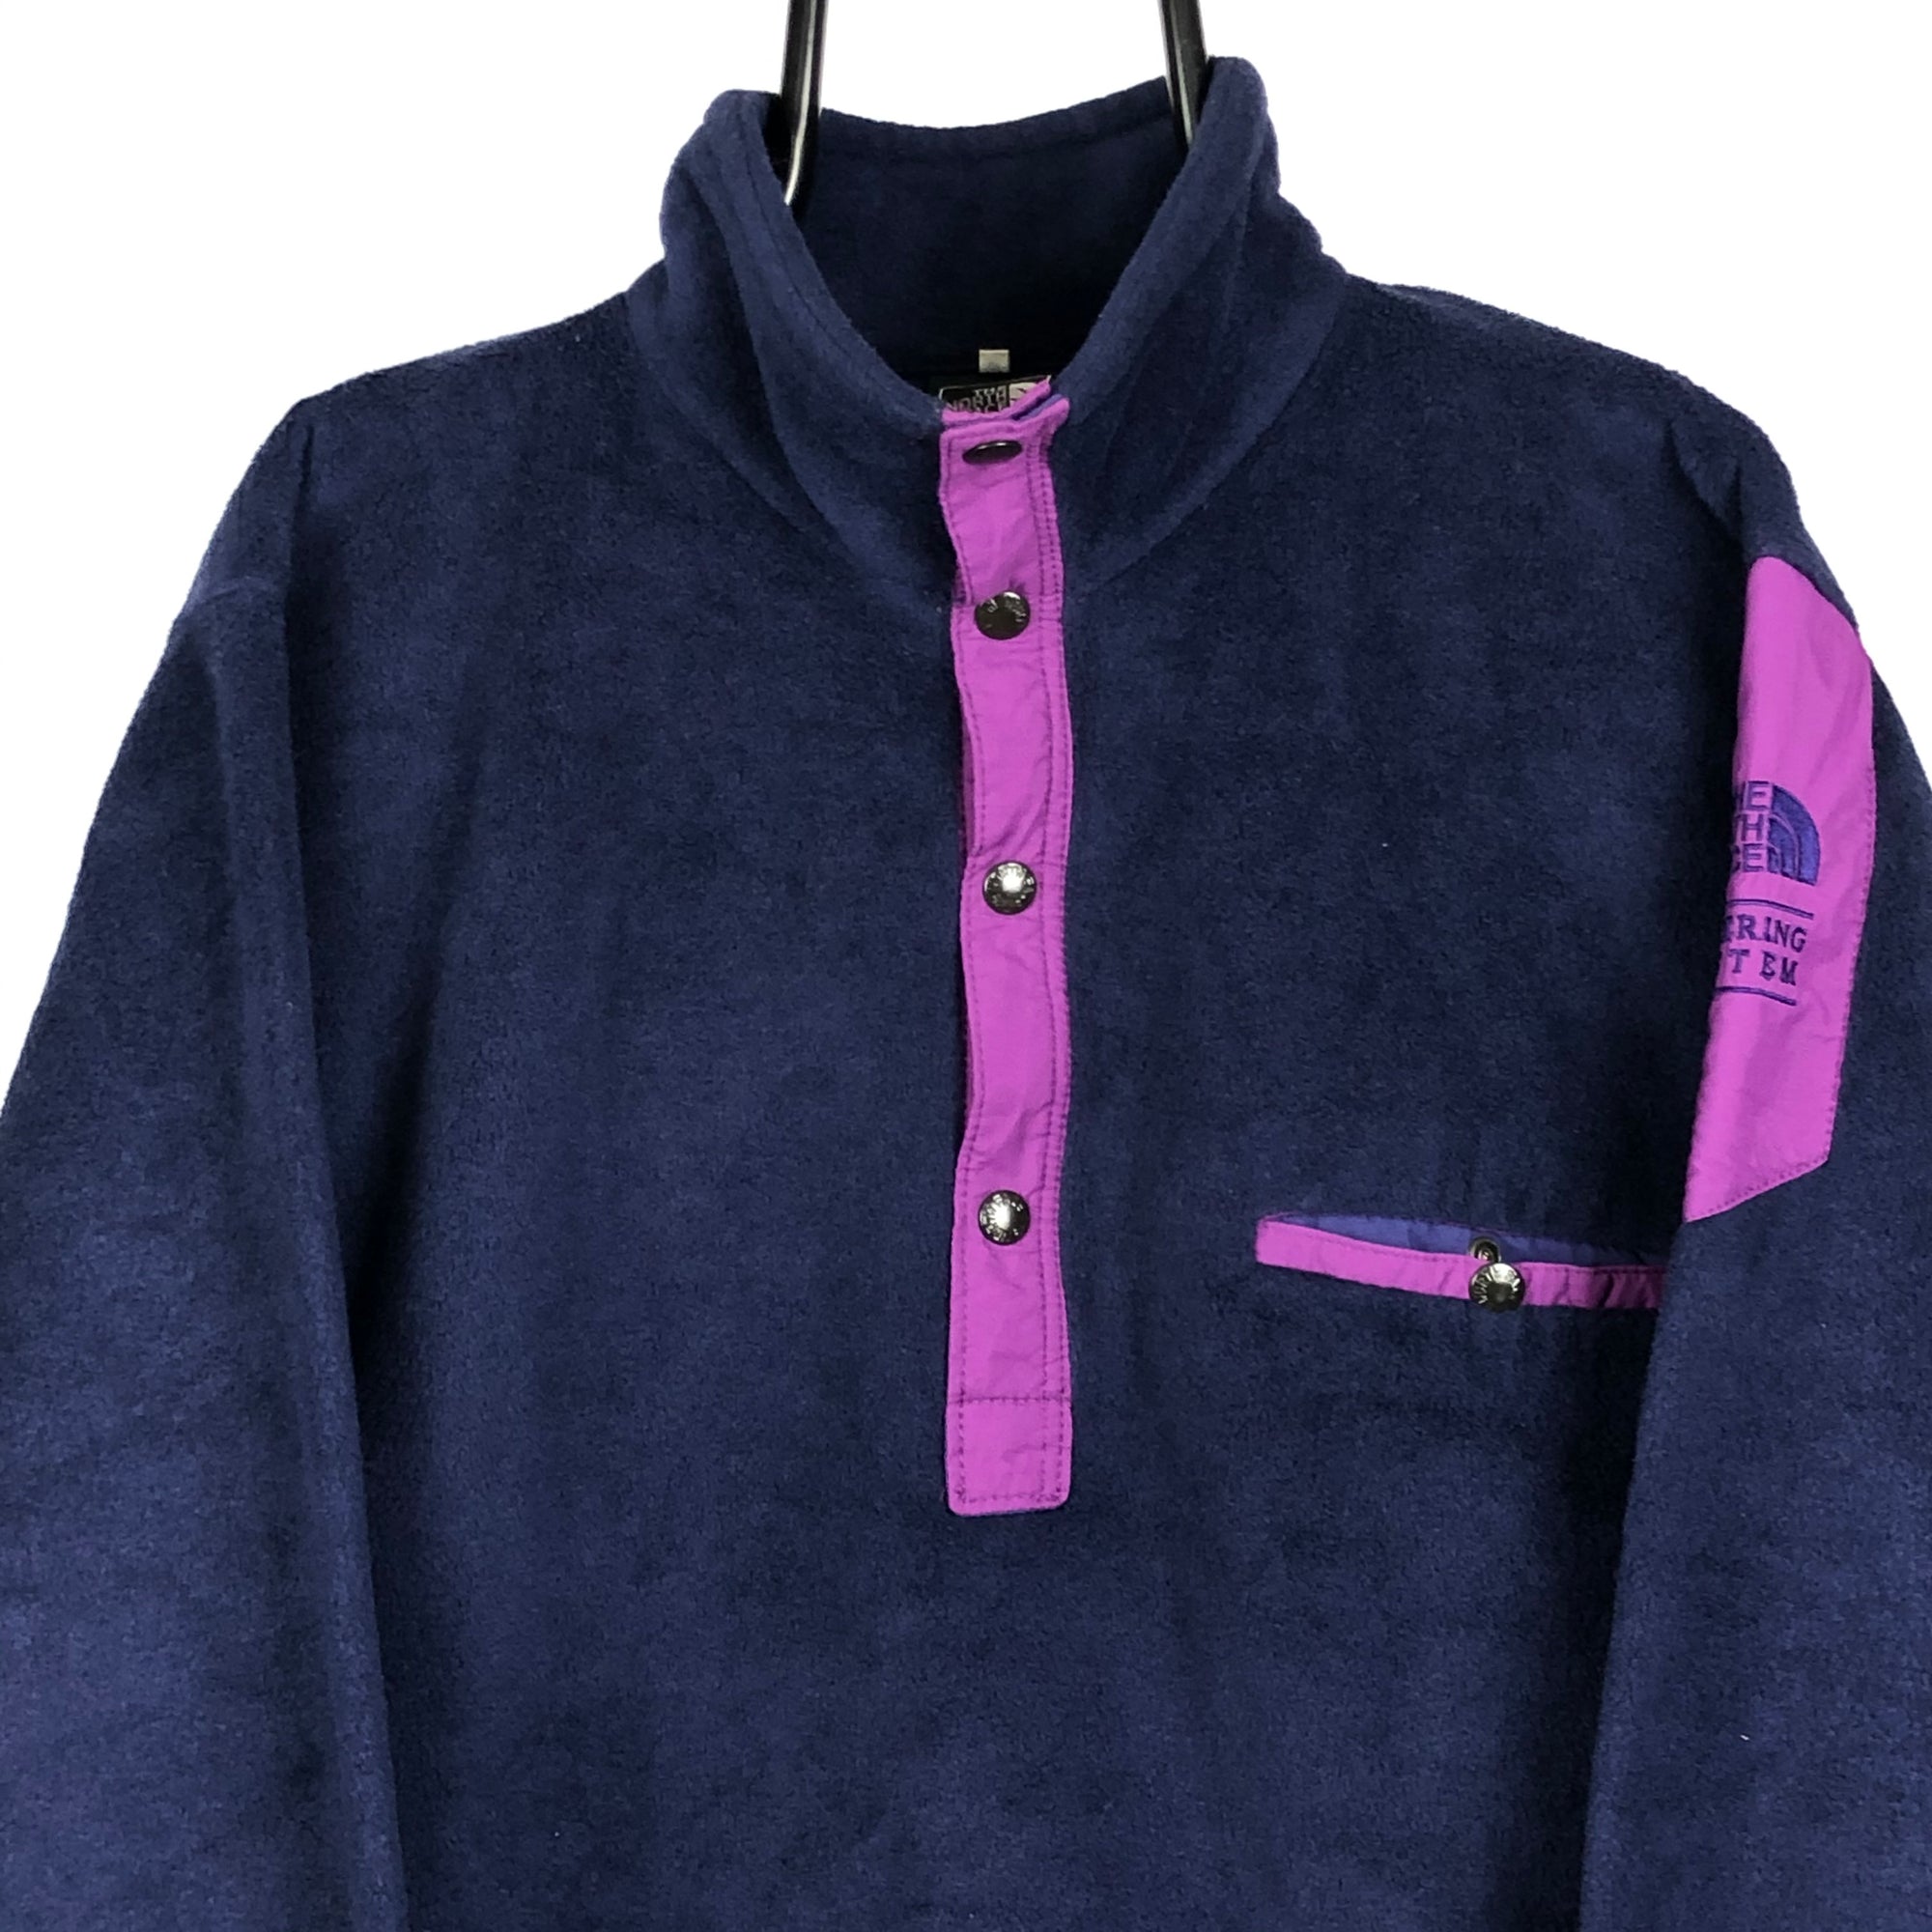 North Face 'Layering System' Fleece in Navy/Pink - Men's Medium/Women's Large